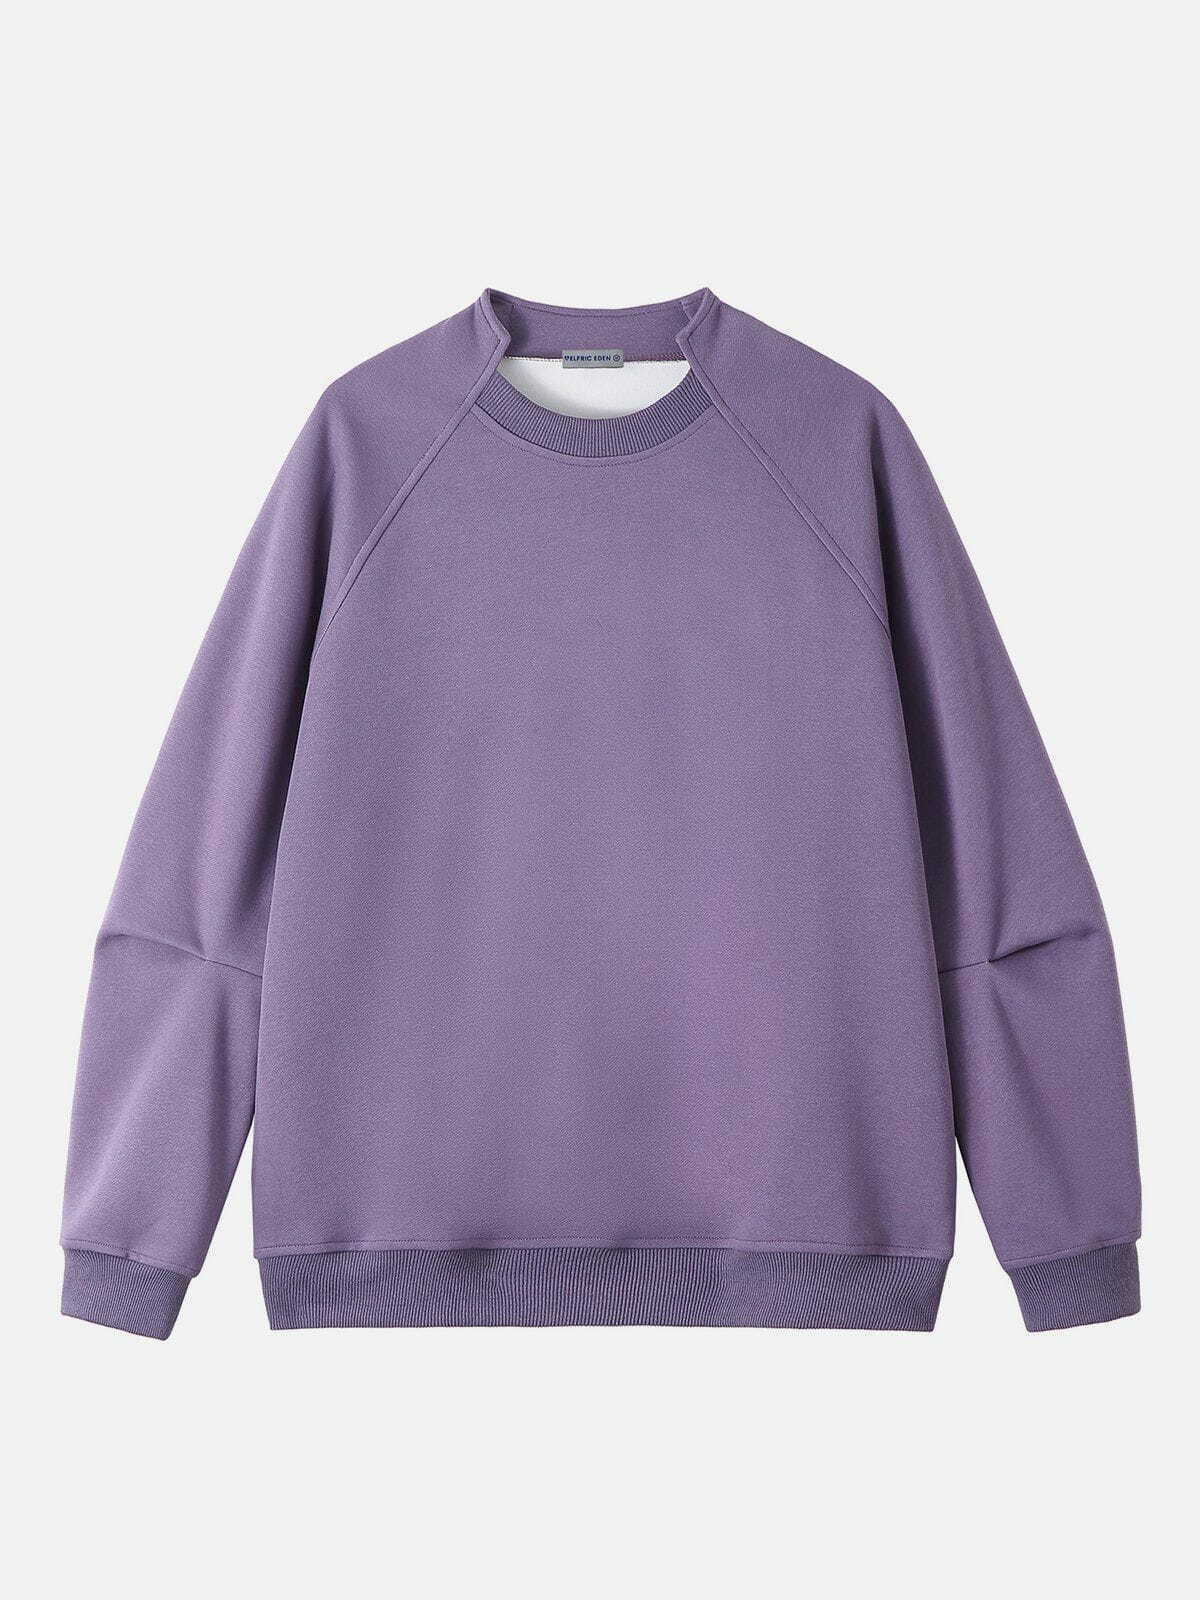 irregular neck sweatshirt edgy & retro streetwear 3954